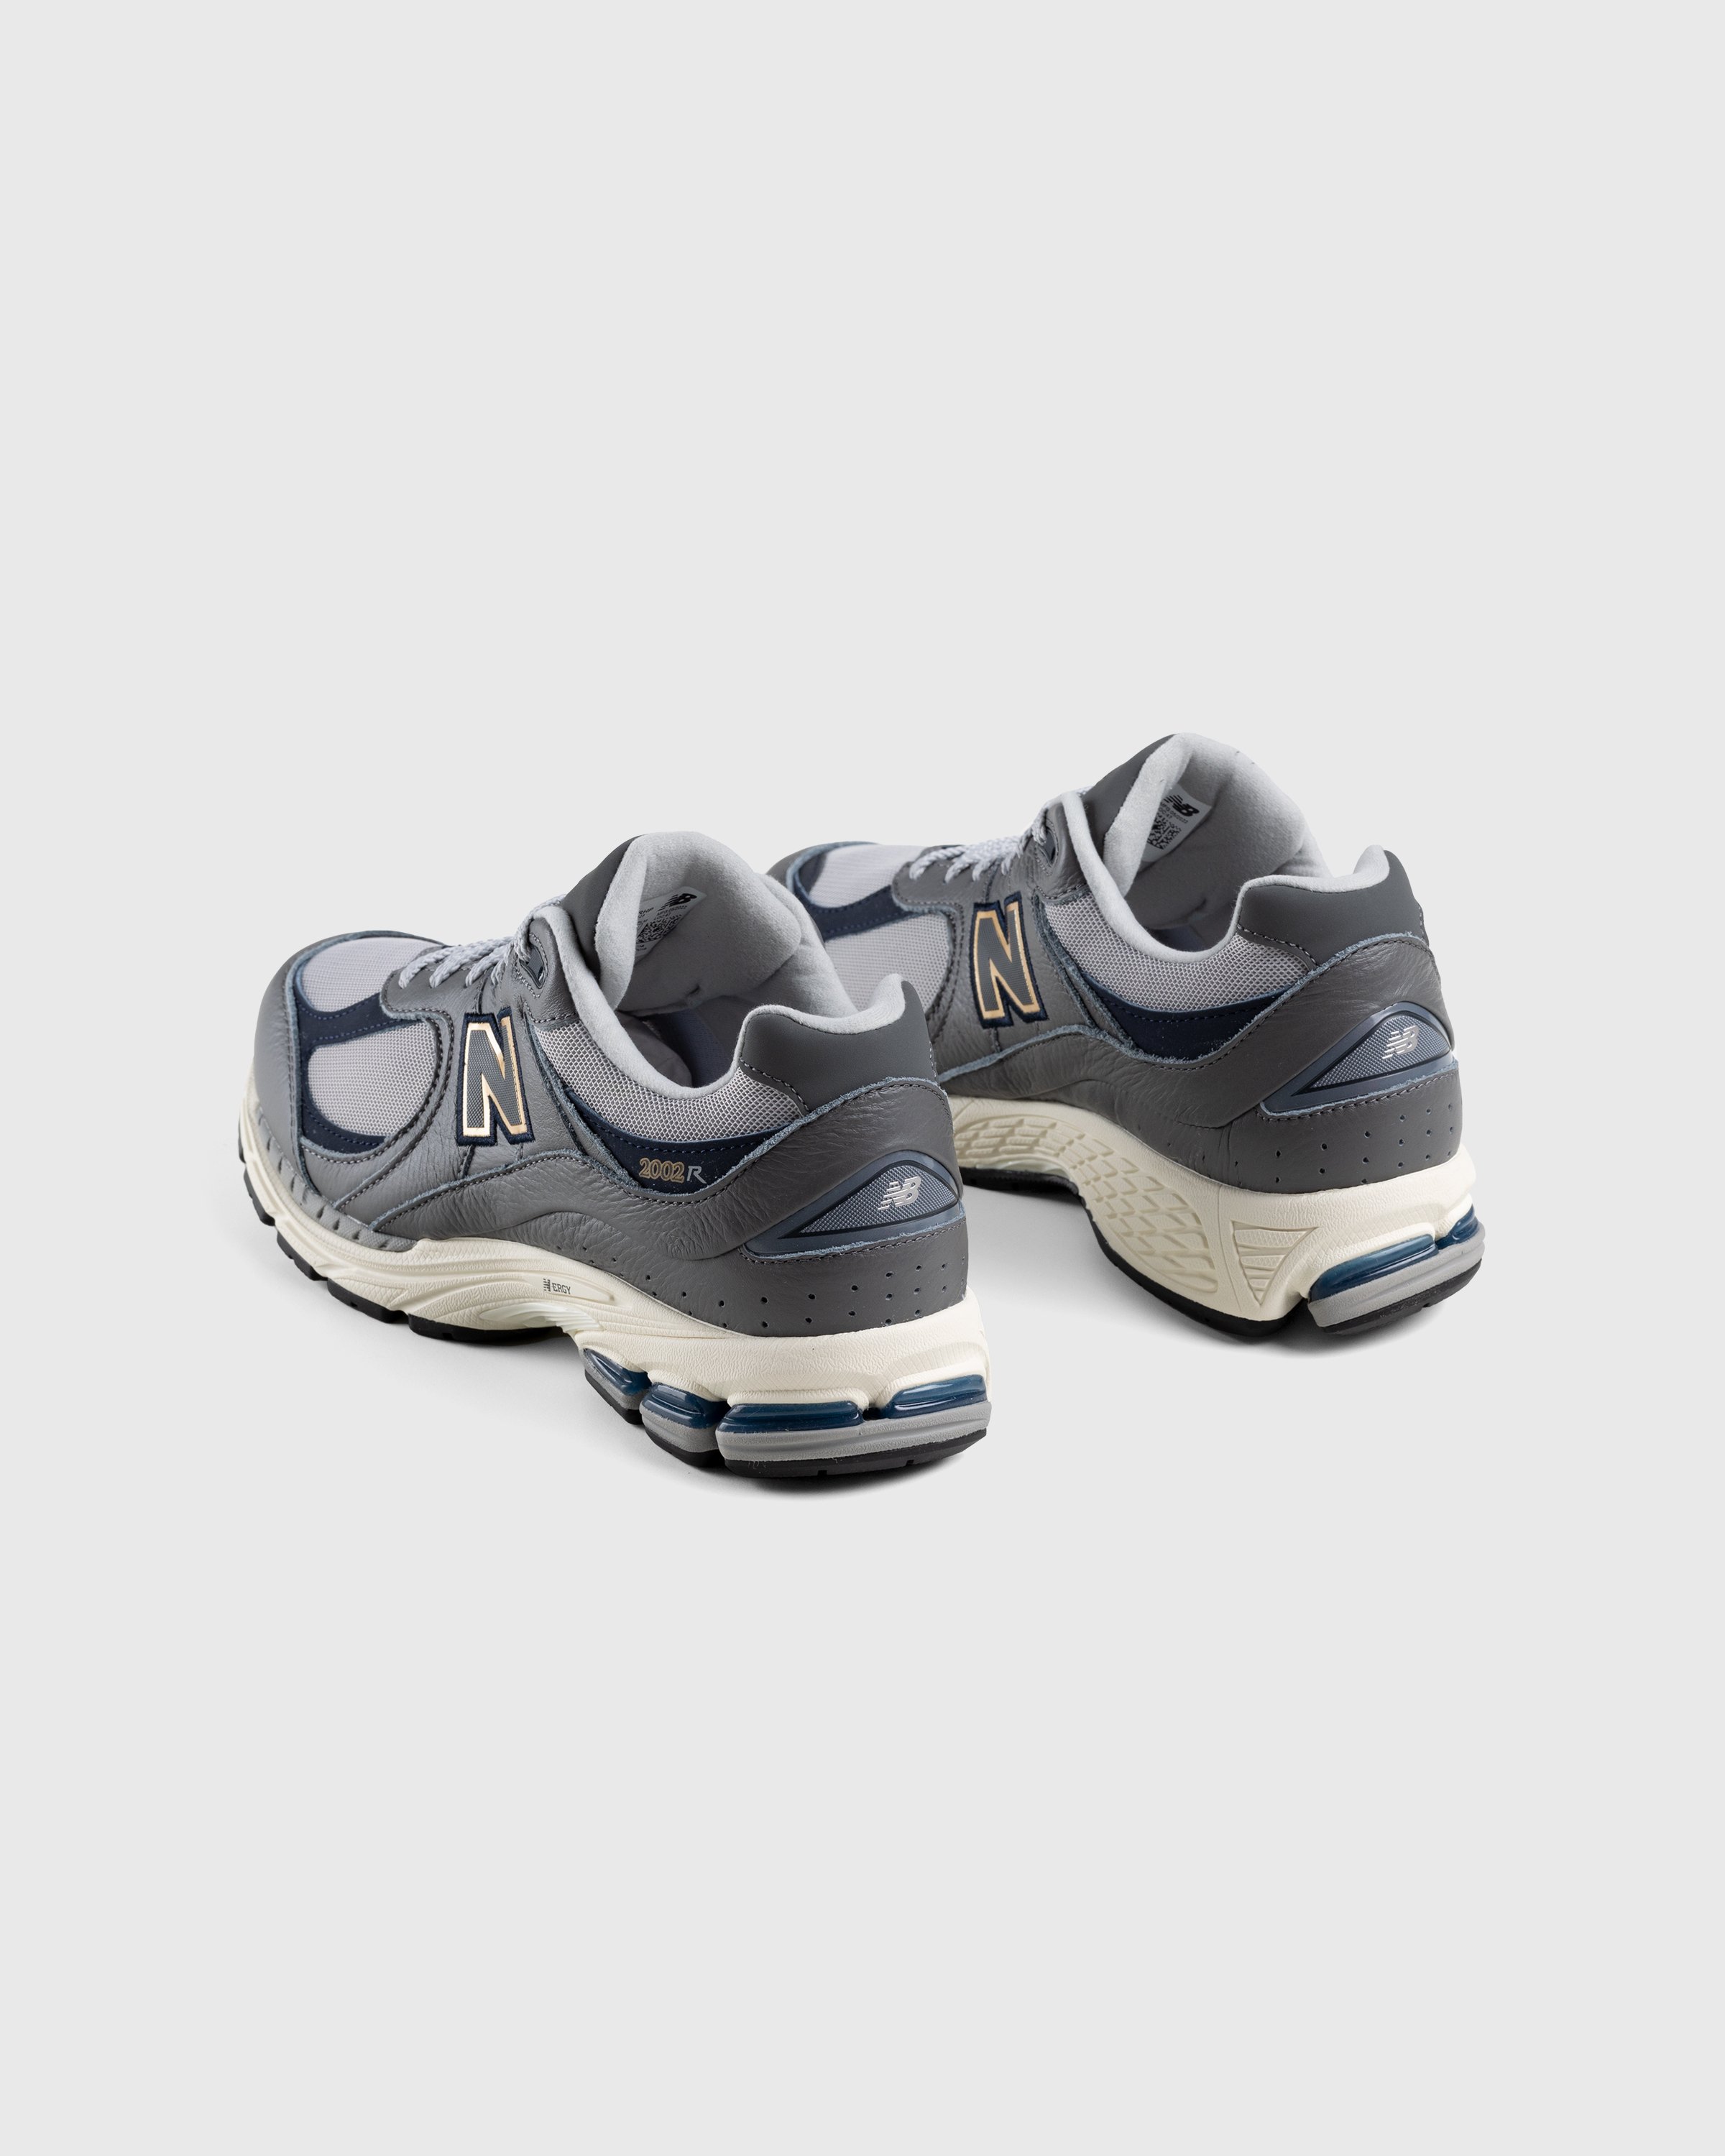 New Balance - M2002RHP Castle Rock - Footwear - Grey - Image 4